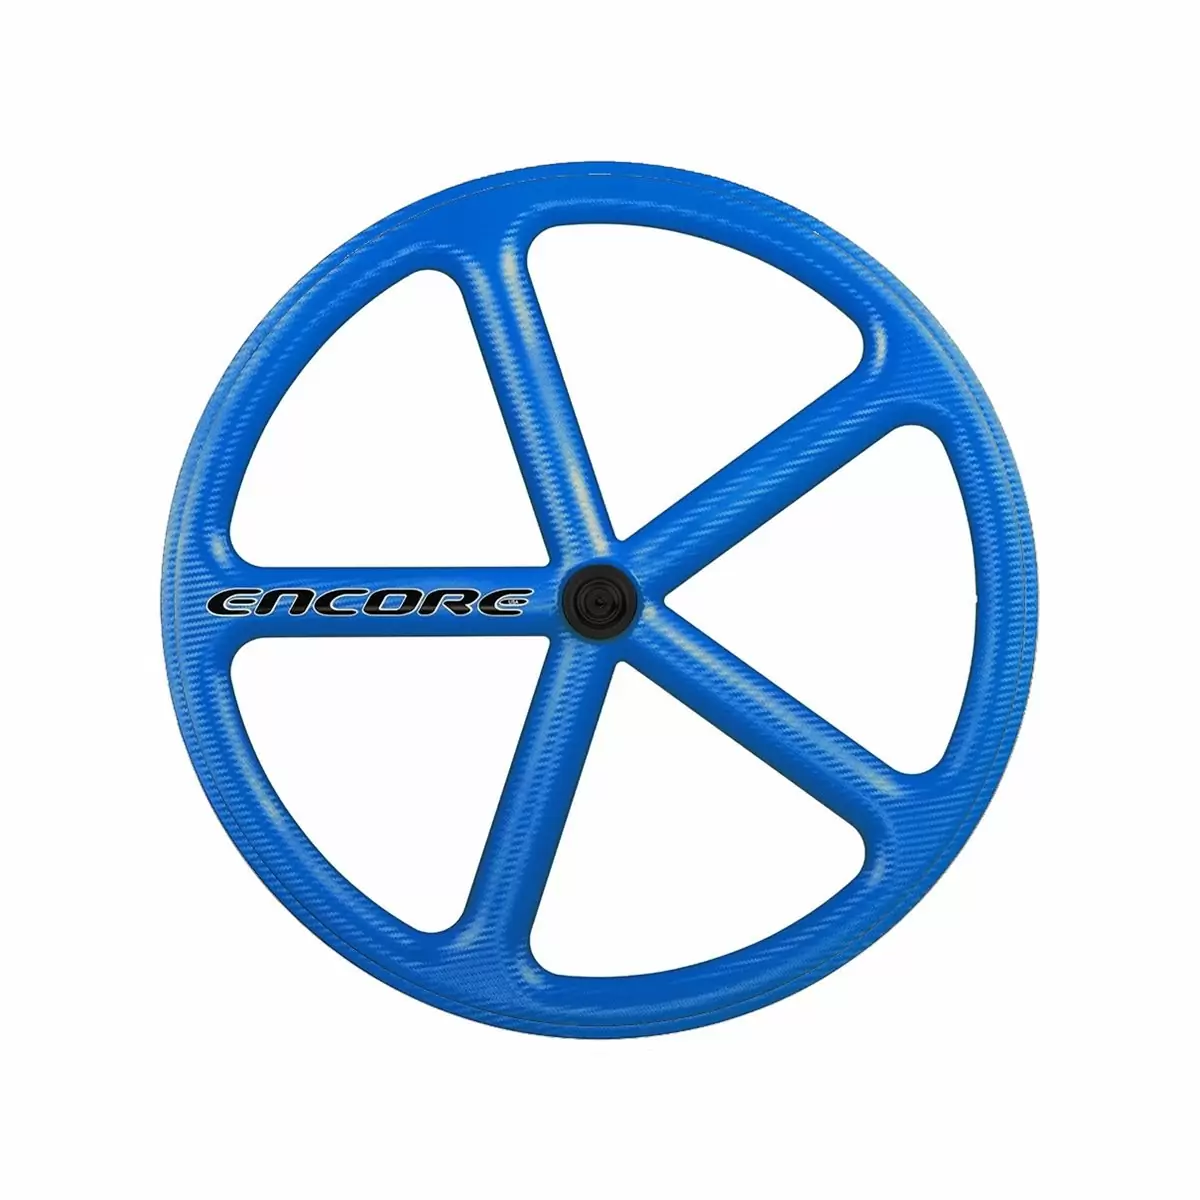 roue avant 700c piste 5 rayons carbone tissage bleu nmsw - image